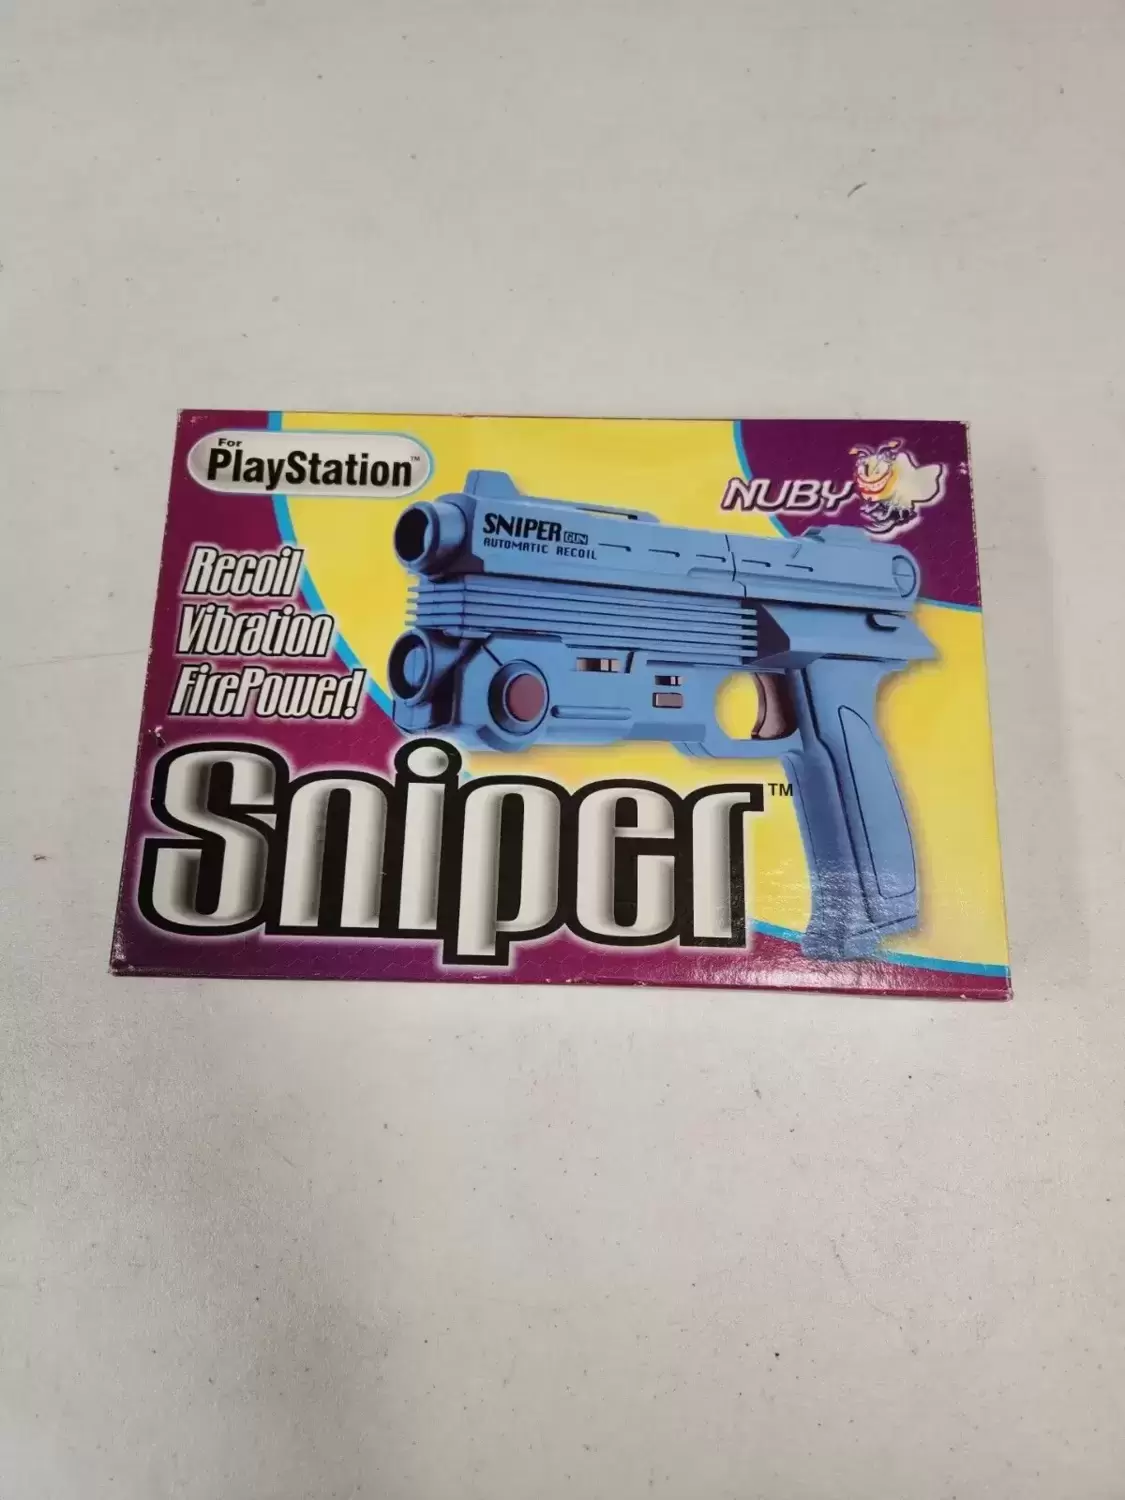 PlayStation material - NUBY Sniper Recoil Vibration